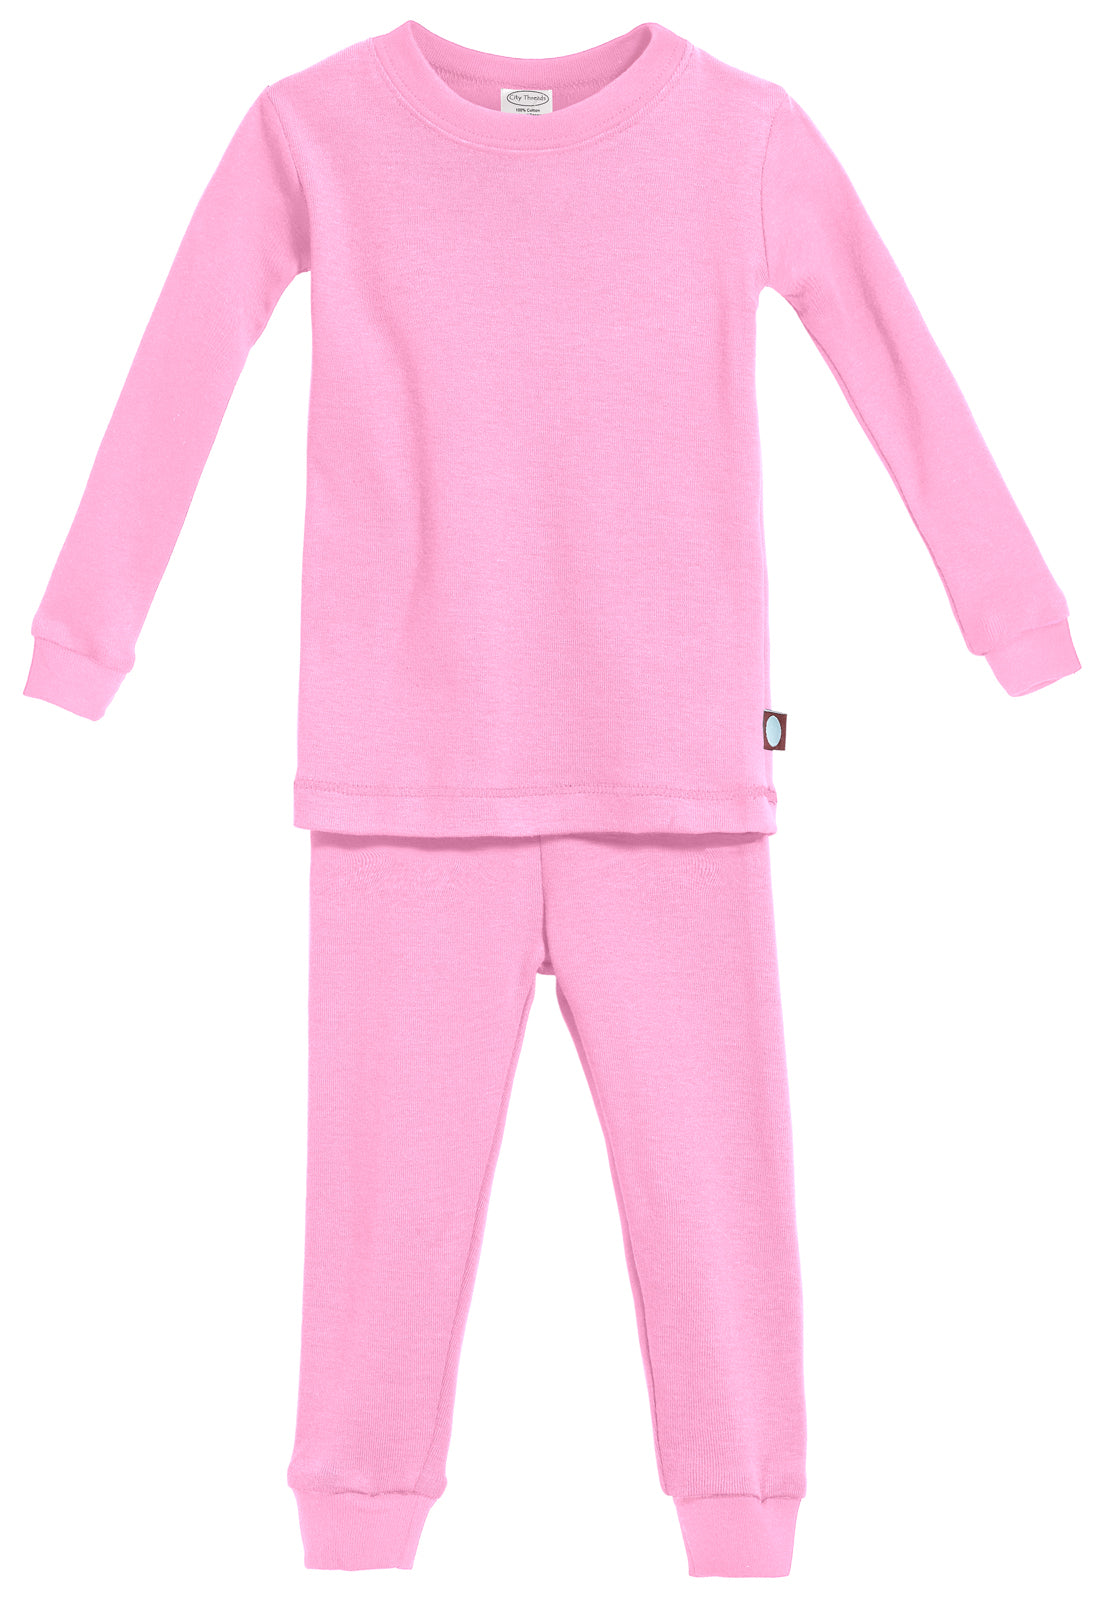 100% Cotton Pajamas Set Women Winter Pink Home Clothes Spring Long